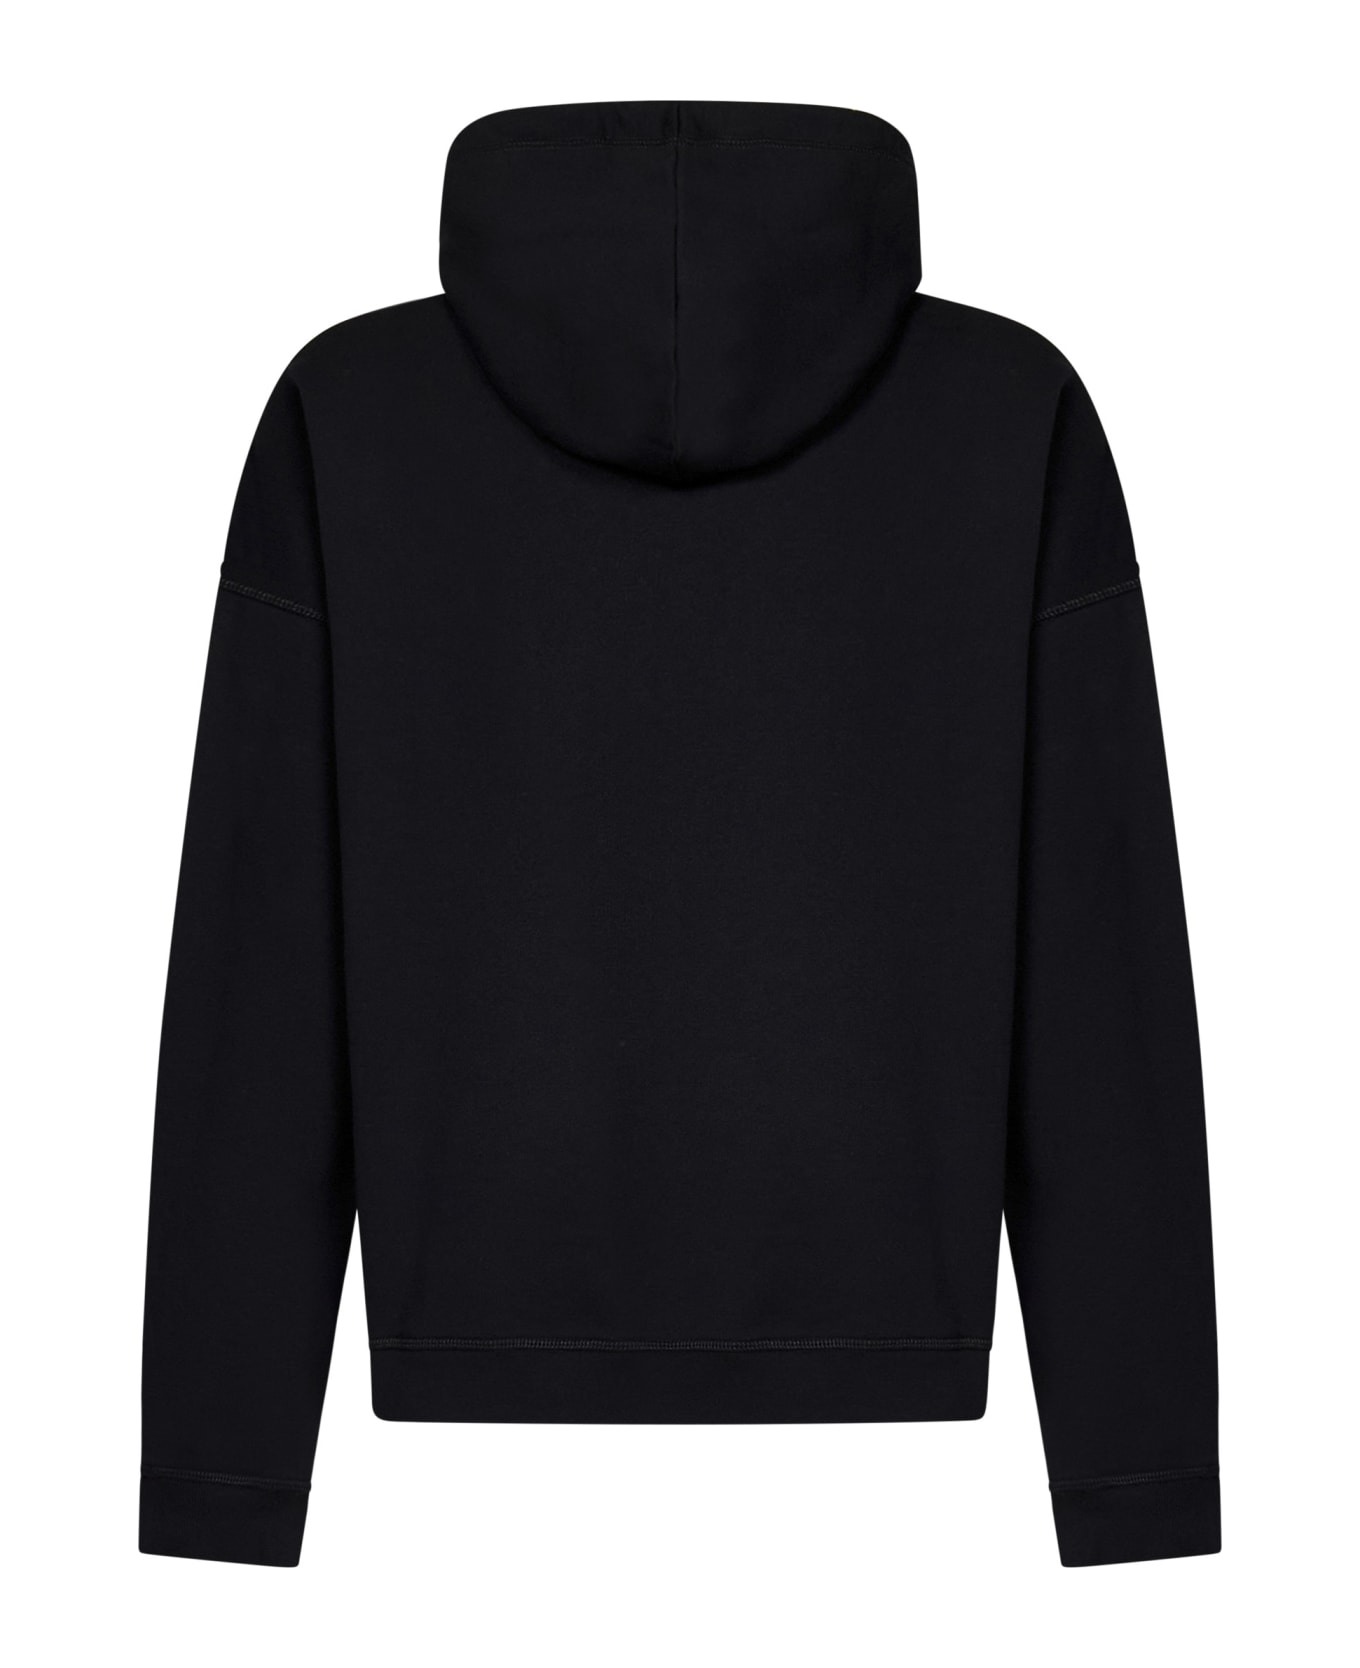 Dsquared2 Betty Boop Sweatshirt - Black